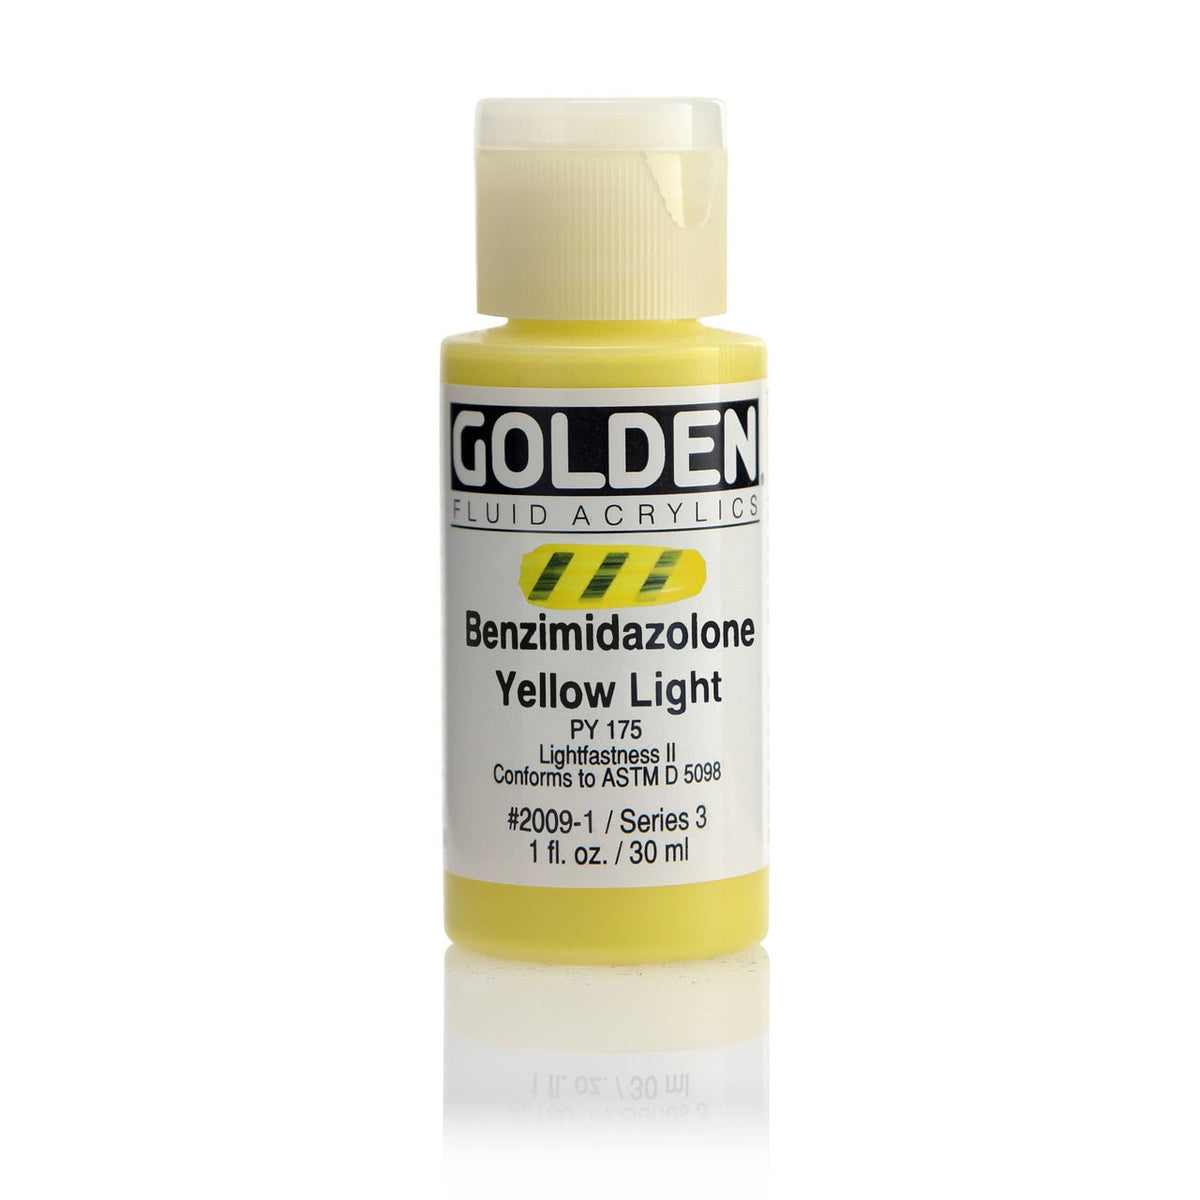 Golden Fluid Acrylic Benzimidazolone Yellow Light 1 oz - merriartist.com